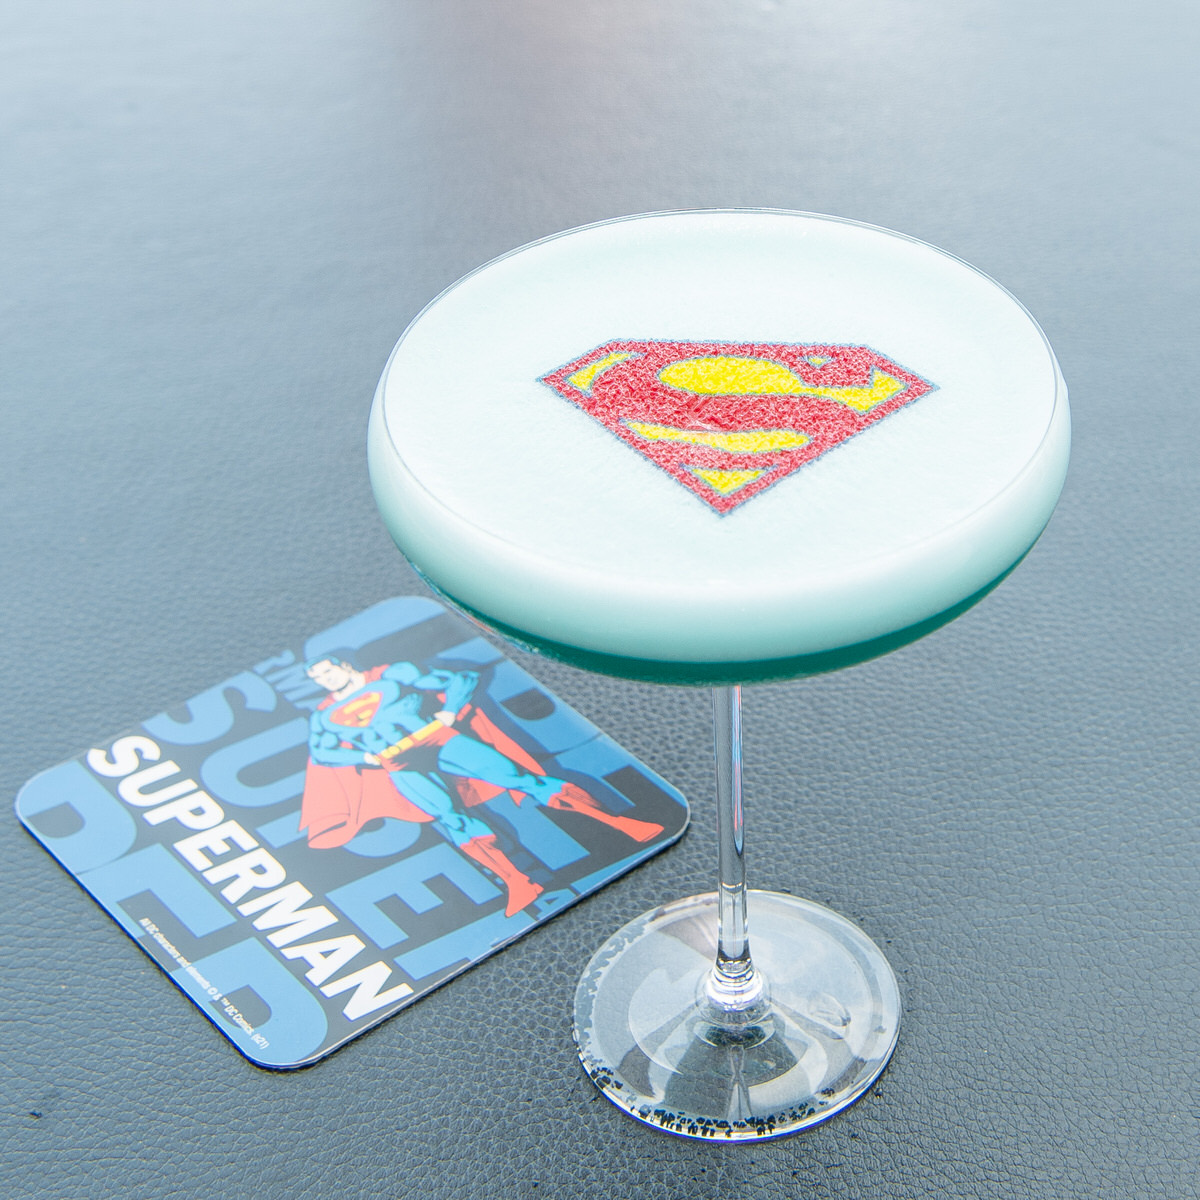 Superman Sky-High Drink